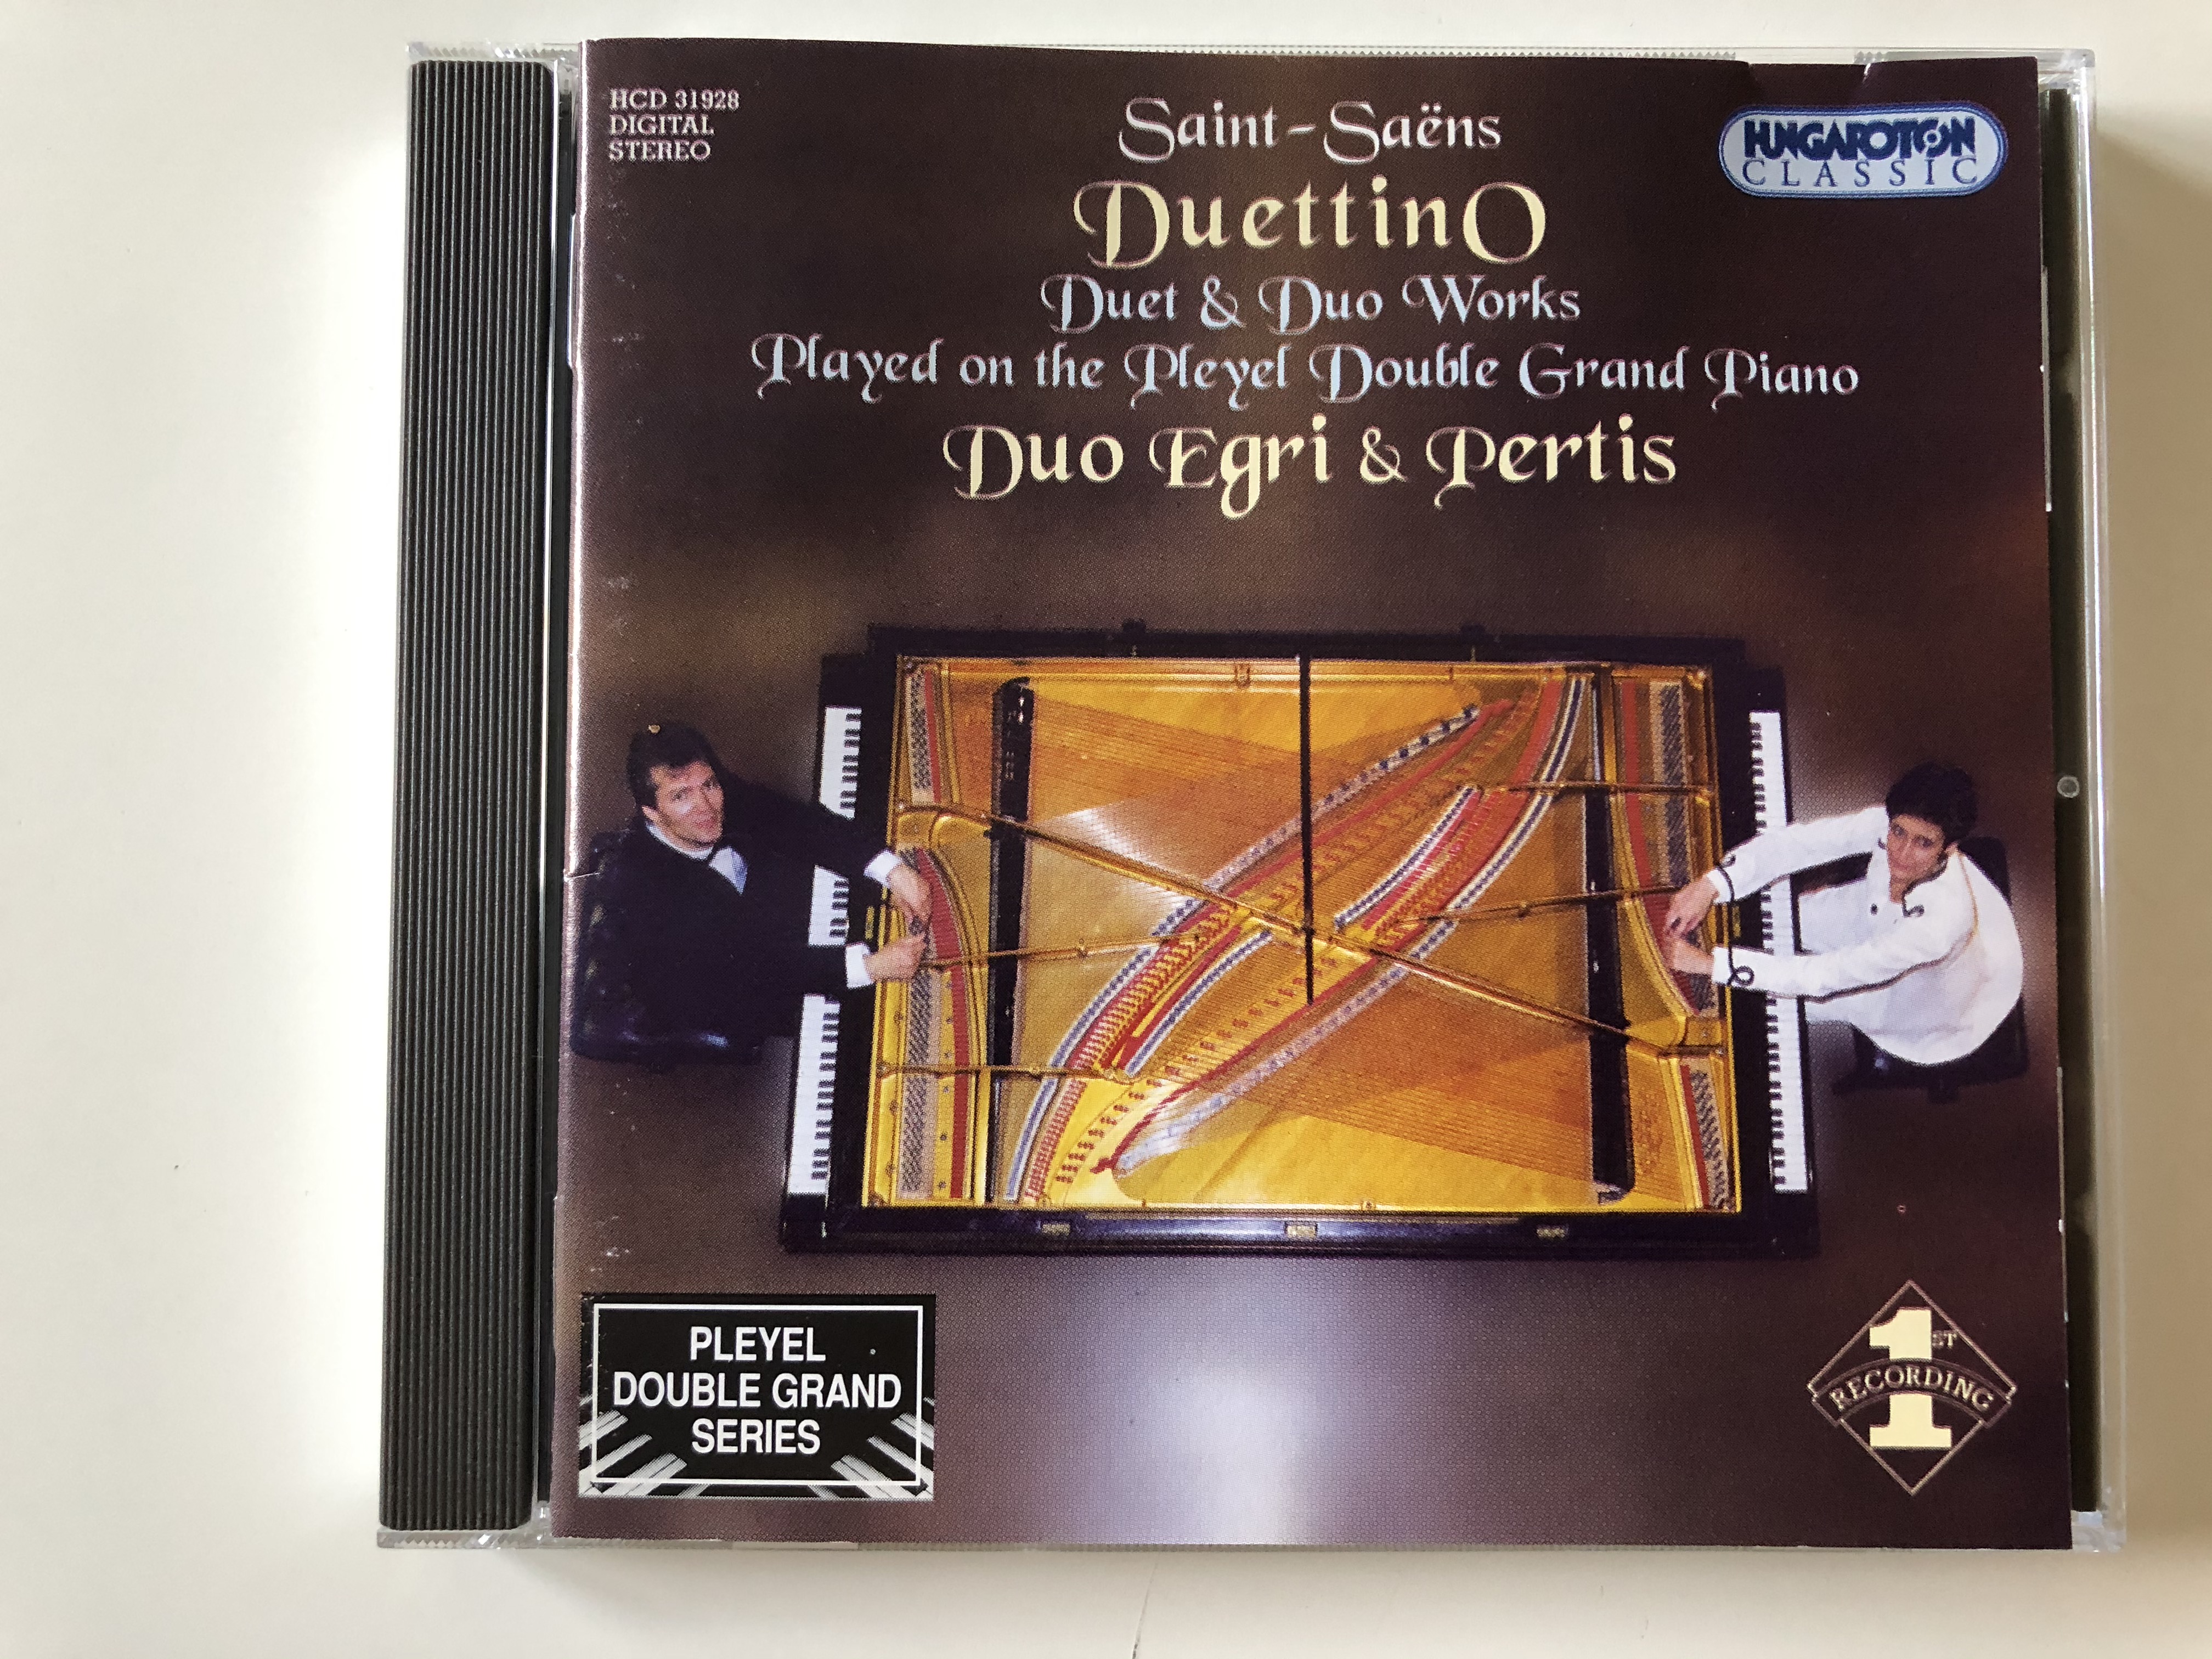 saint-saens-duettino-duet-duo-works-played-on-the-pleyel-double-grand-piano-duo-egri-pertis-pleyel-double-grand-series-hungaroton-classic-audio-cd-2000-stereo-hcd-31928-1-.jpg